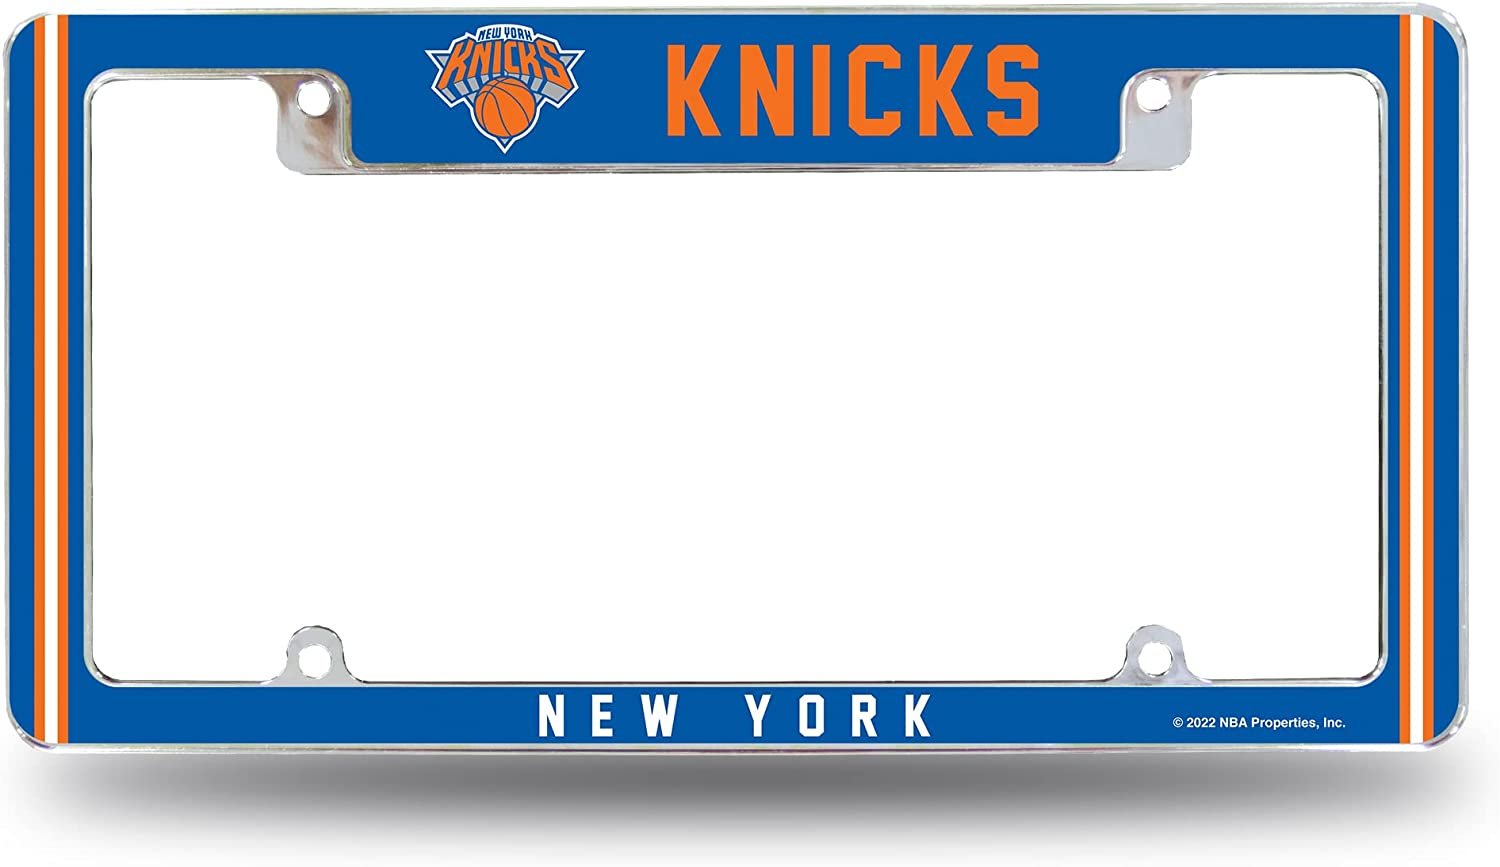 New York Knicks Metal License Plate Frame Chrome Tag Cover Alternate Design 6x12 Inch